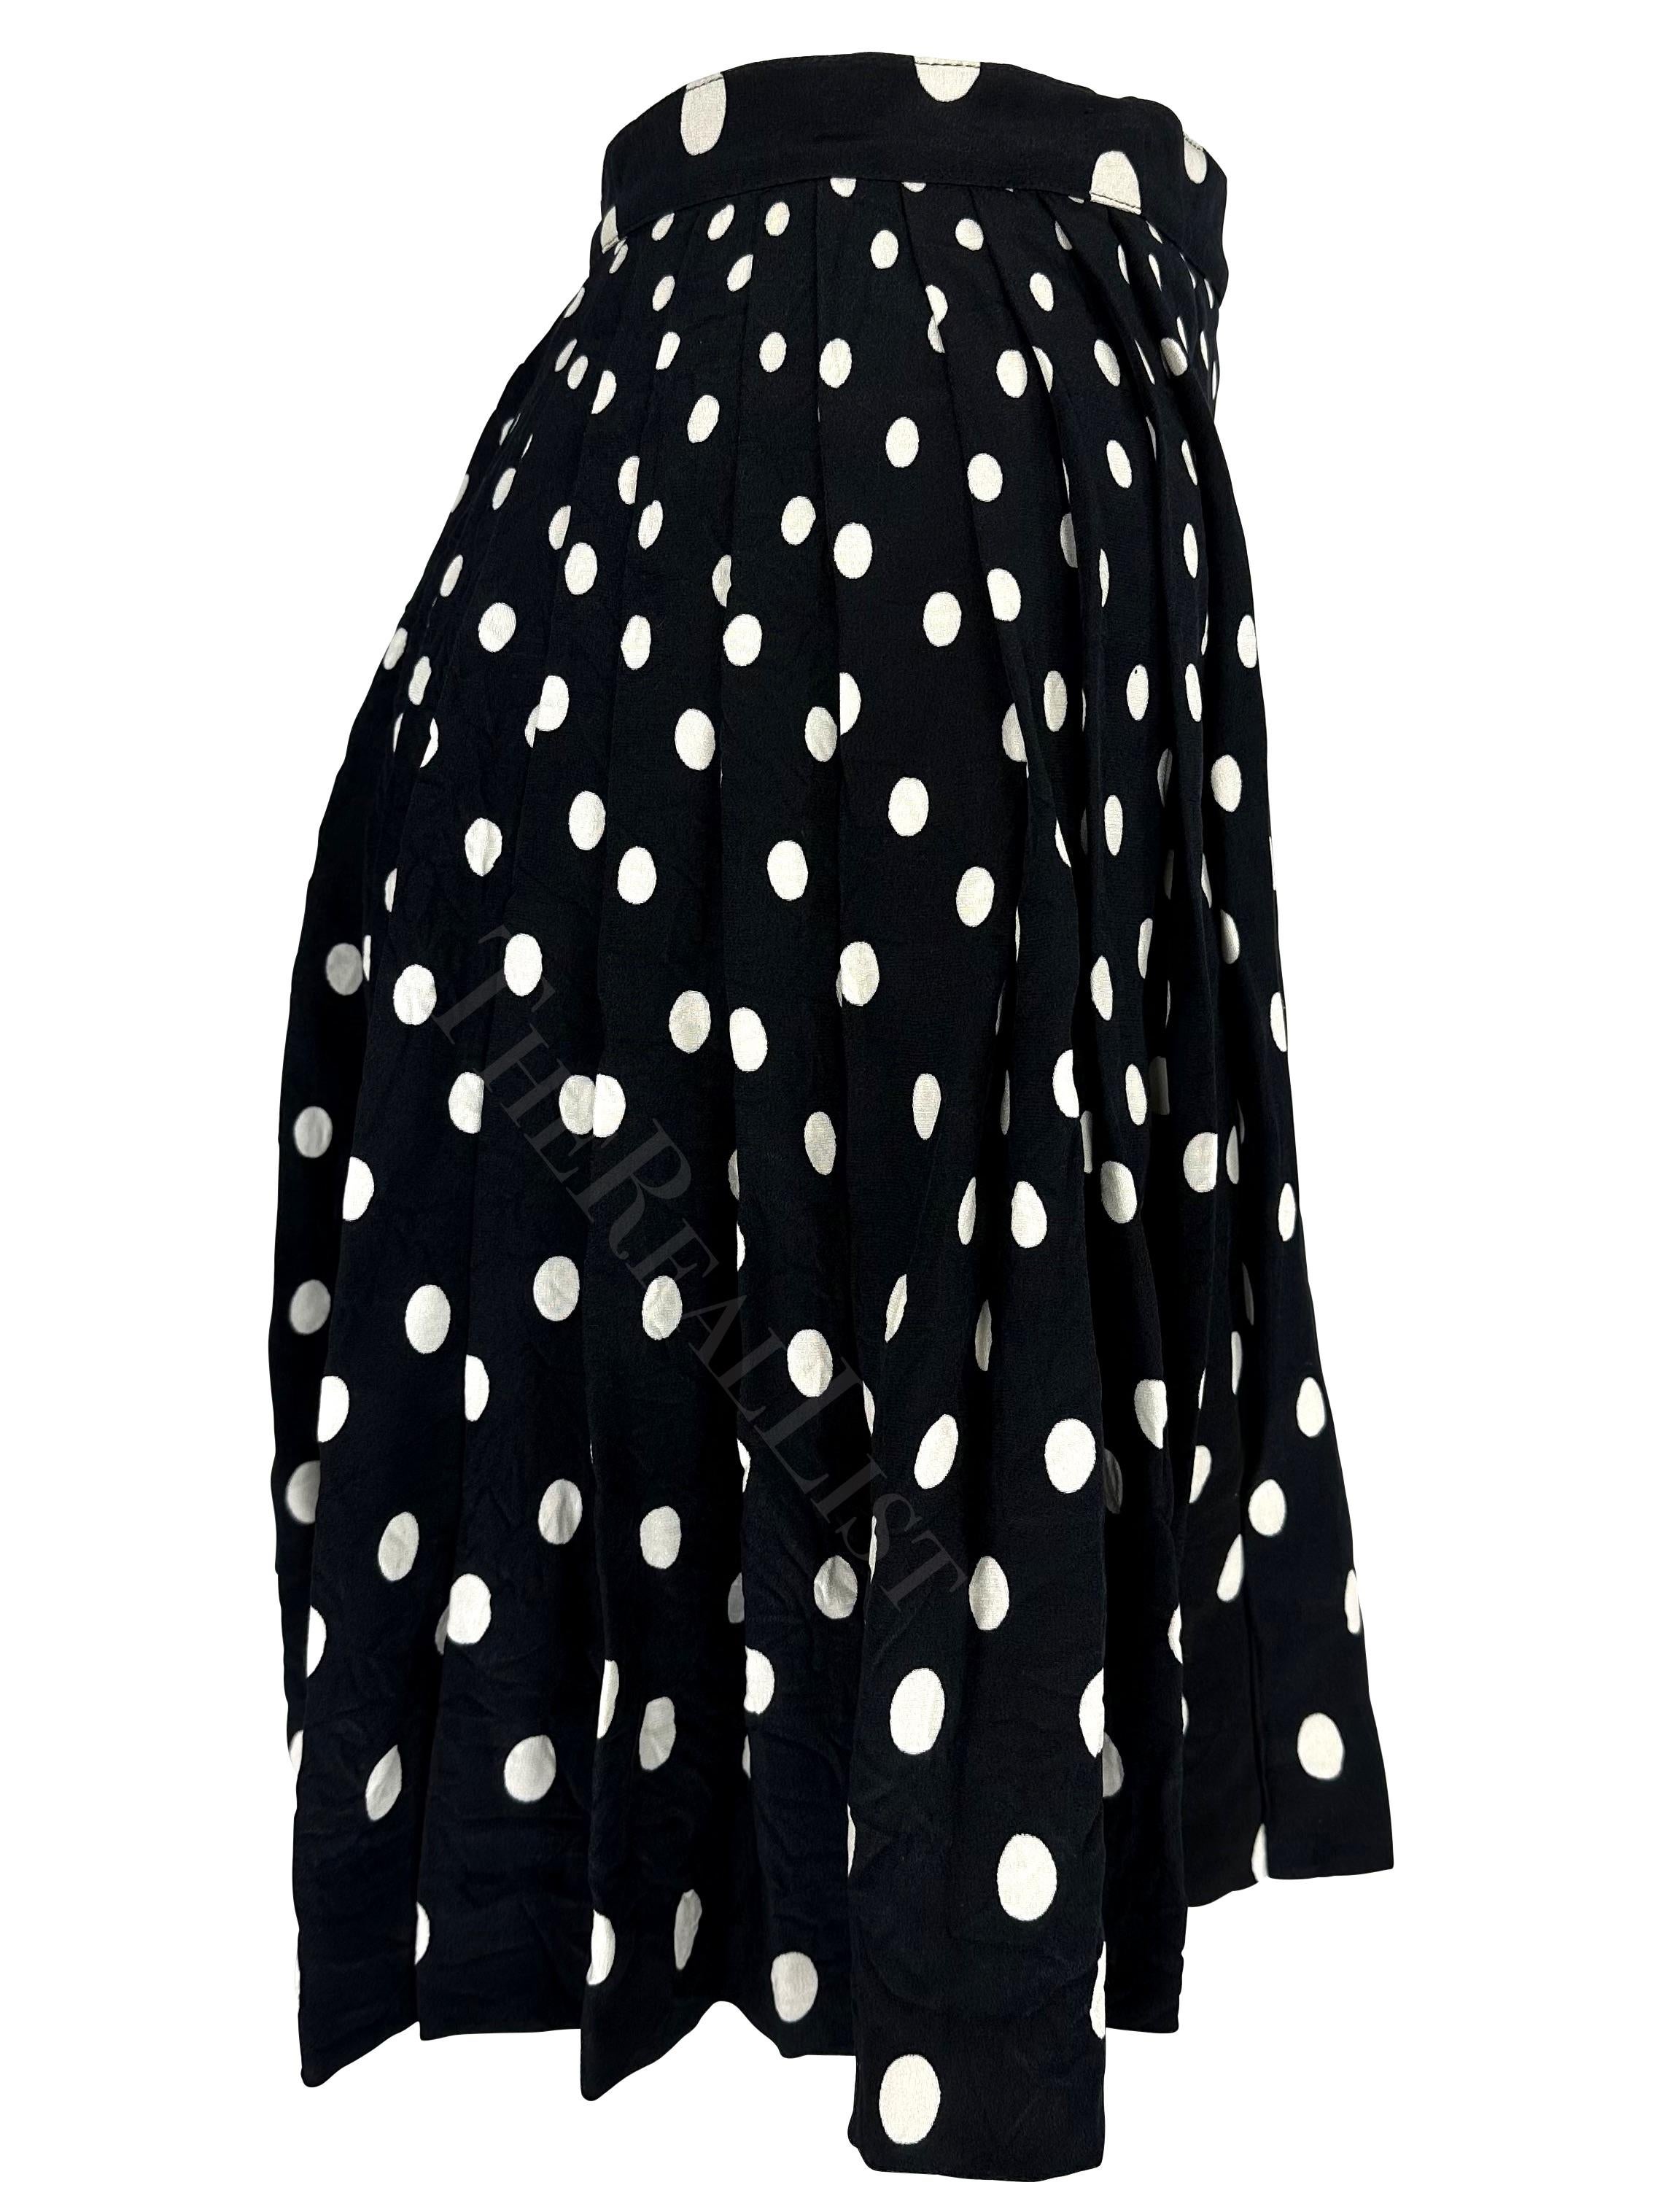 NWT S/S 1994 Gianni Versace Black White Polka Dot Pleated Wrap Skirt For Sale 1